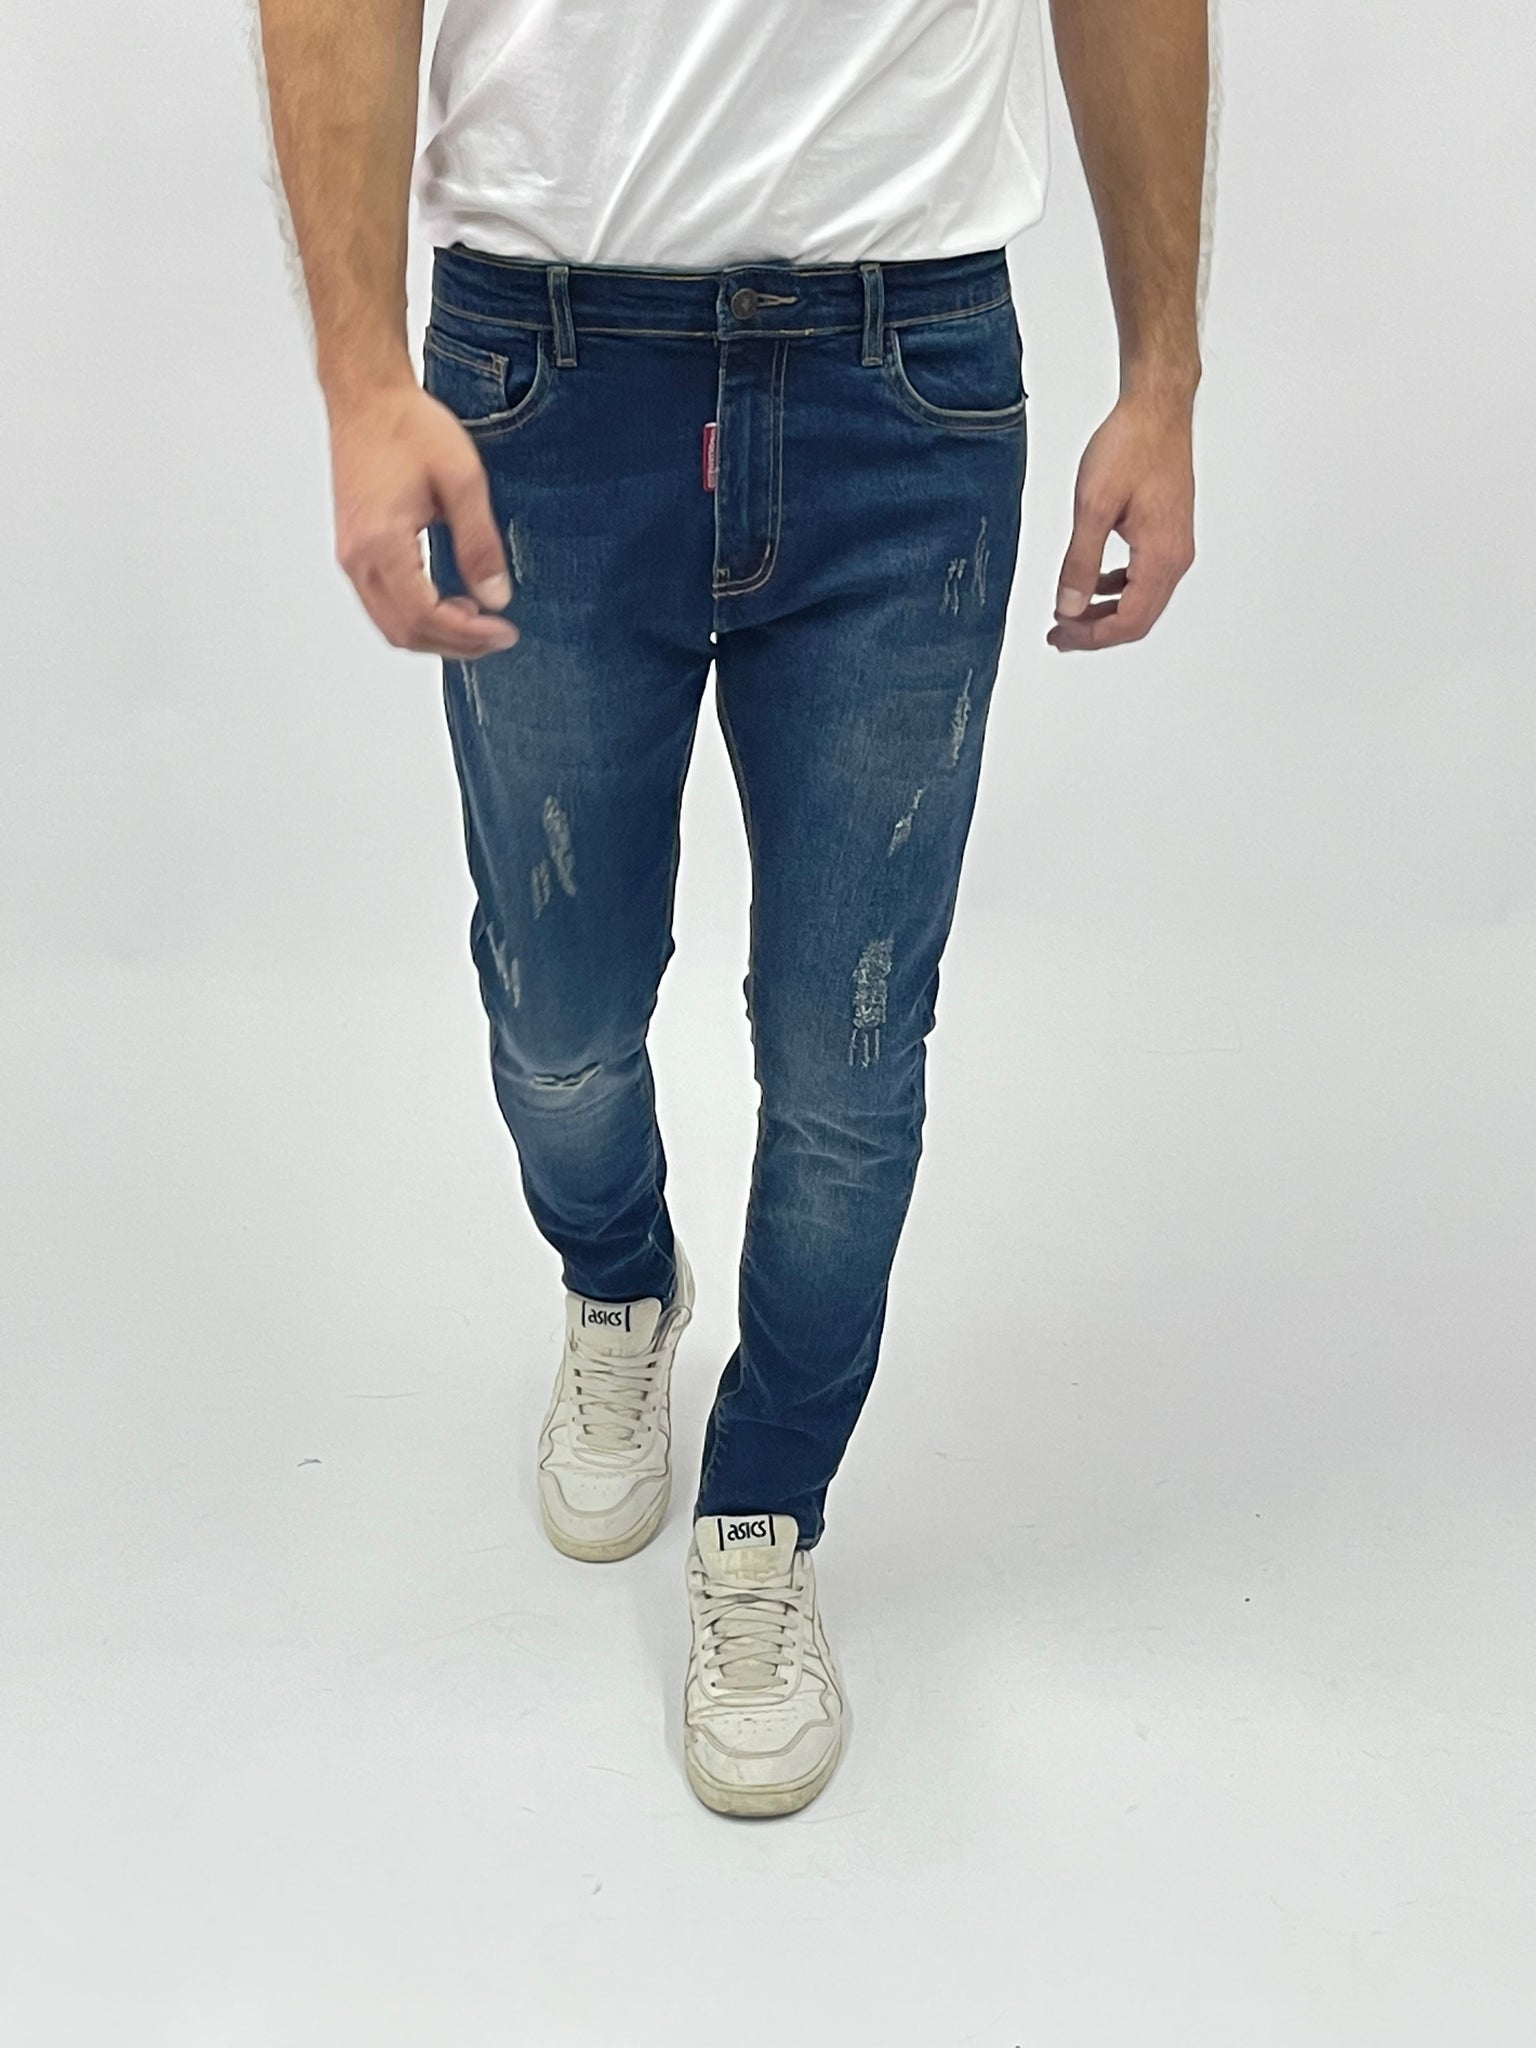 Men Slim FitJeans - YT256/2/2